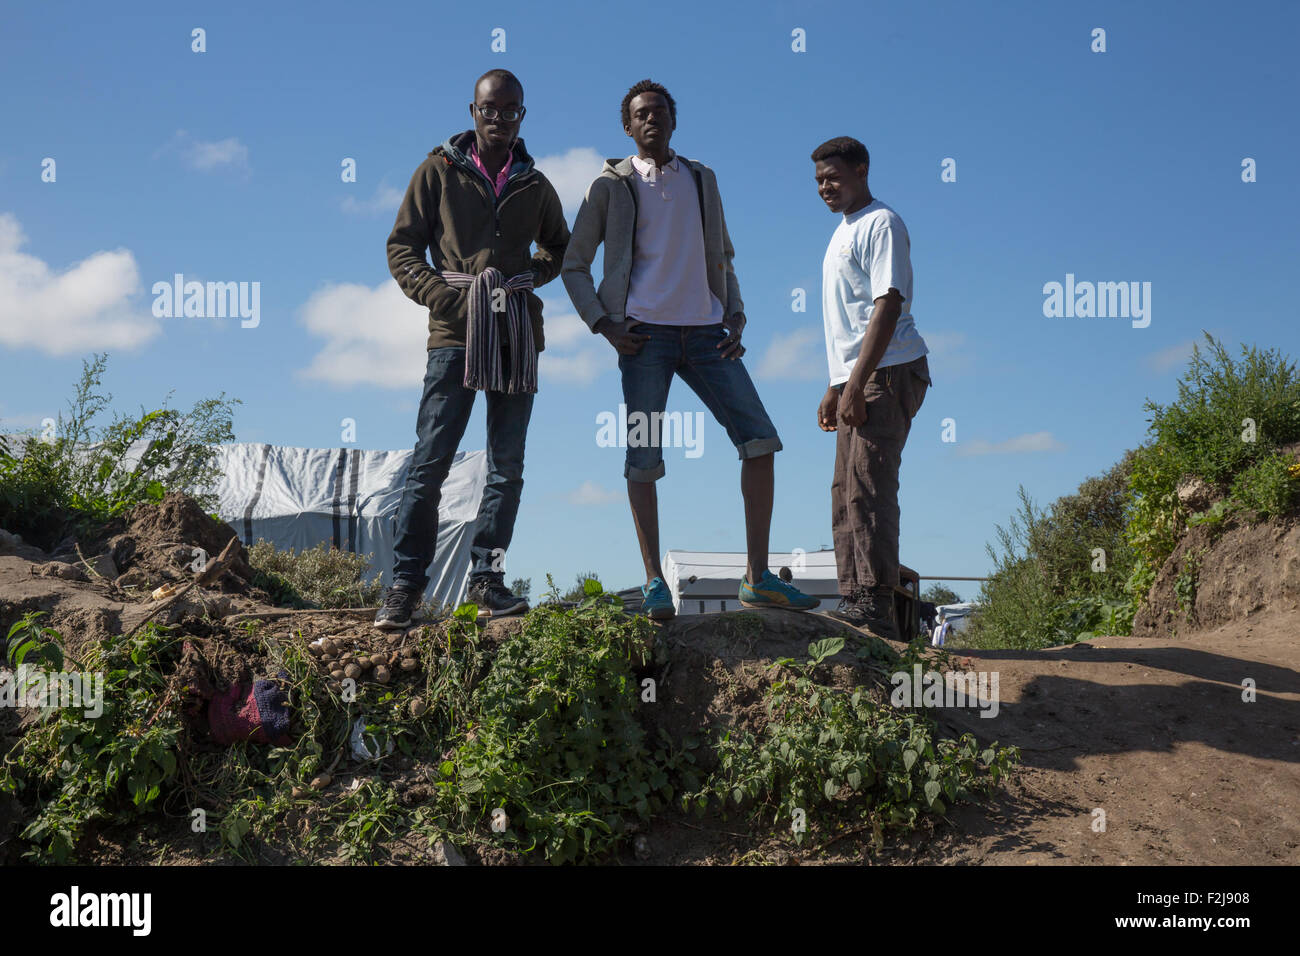 Calais, Frankreich. 19. September 2015. Junge Flüchtlinge aus dem Sudan im Dschungel-Camp in Calais, Frankreich Credit: auf Anblick Photographic/Alamy Live News Stockfoto